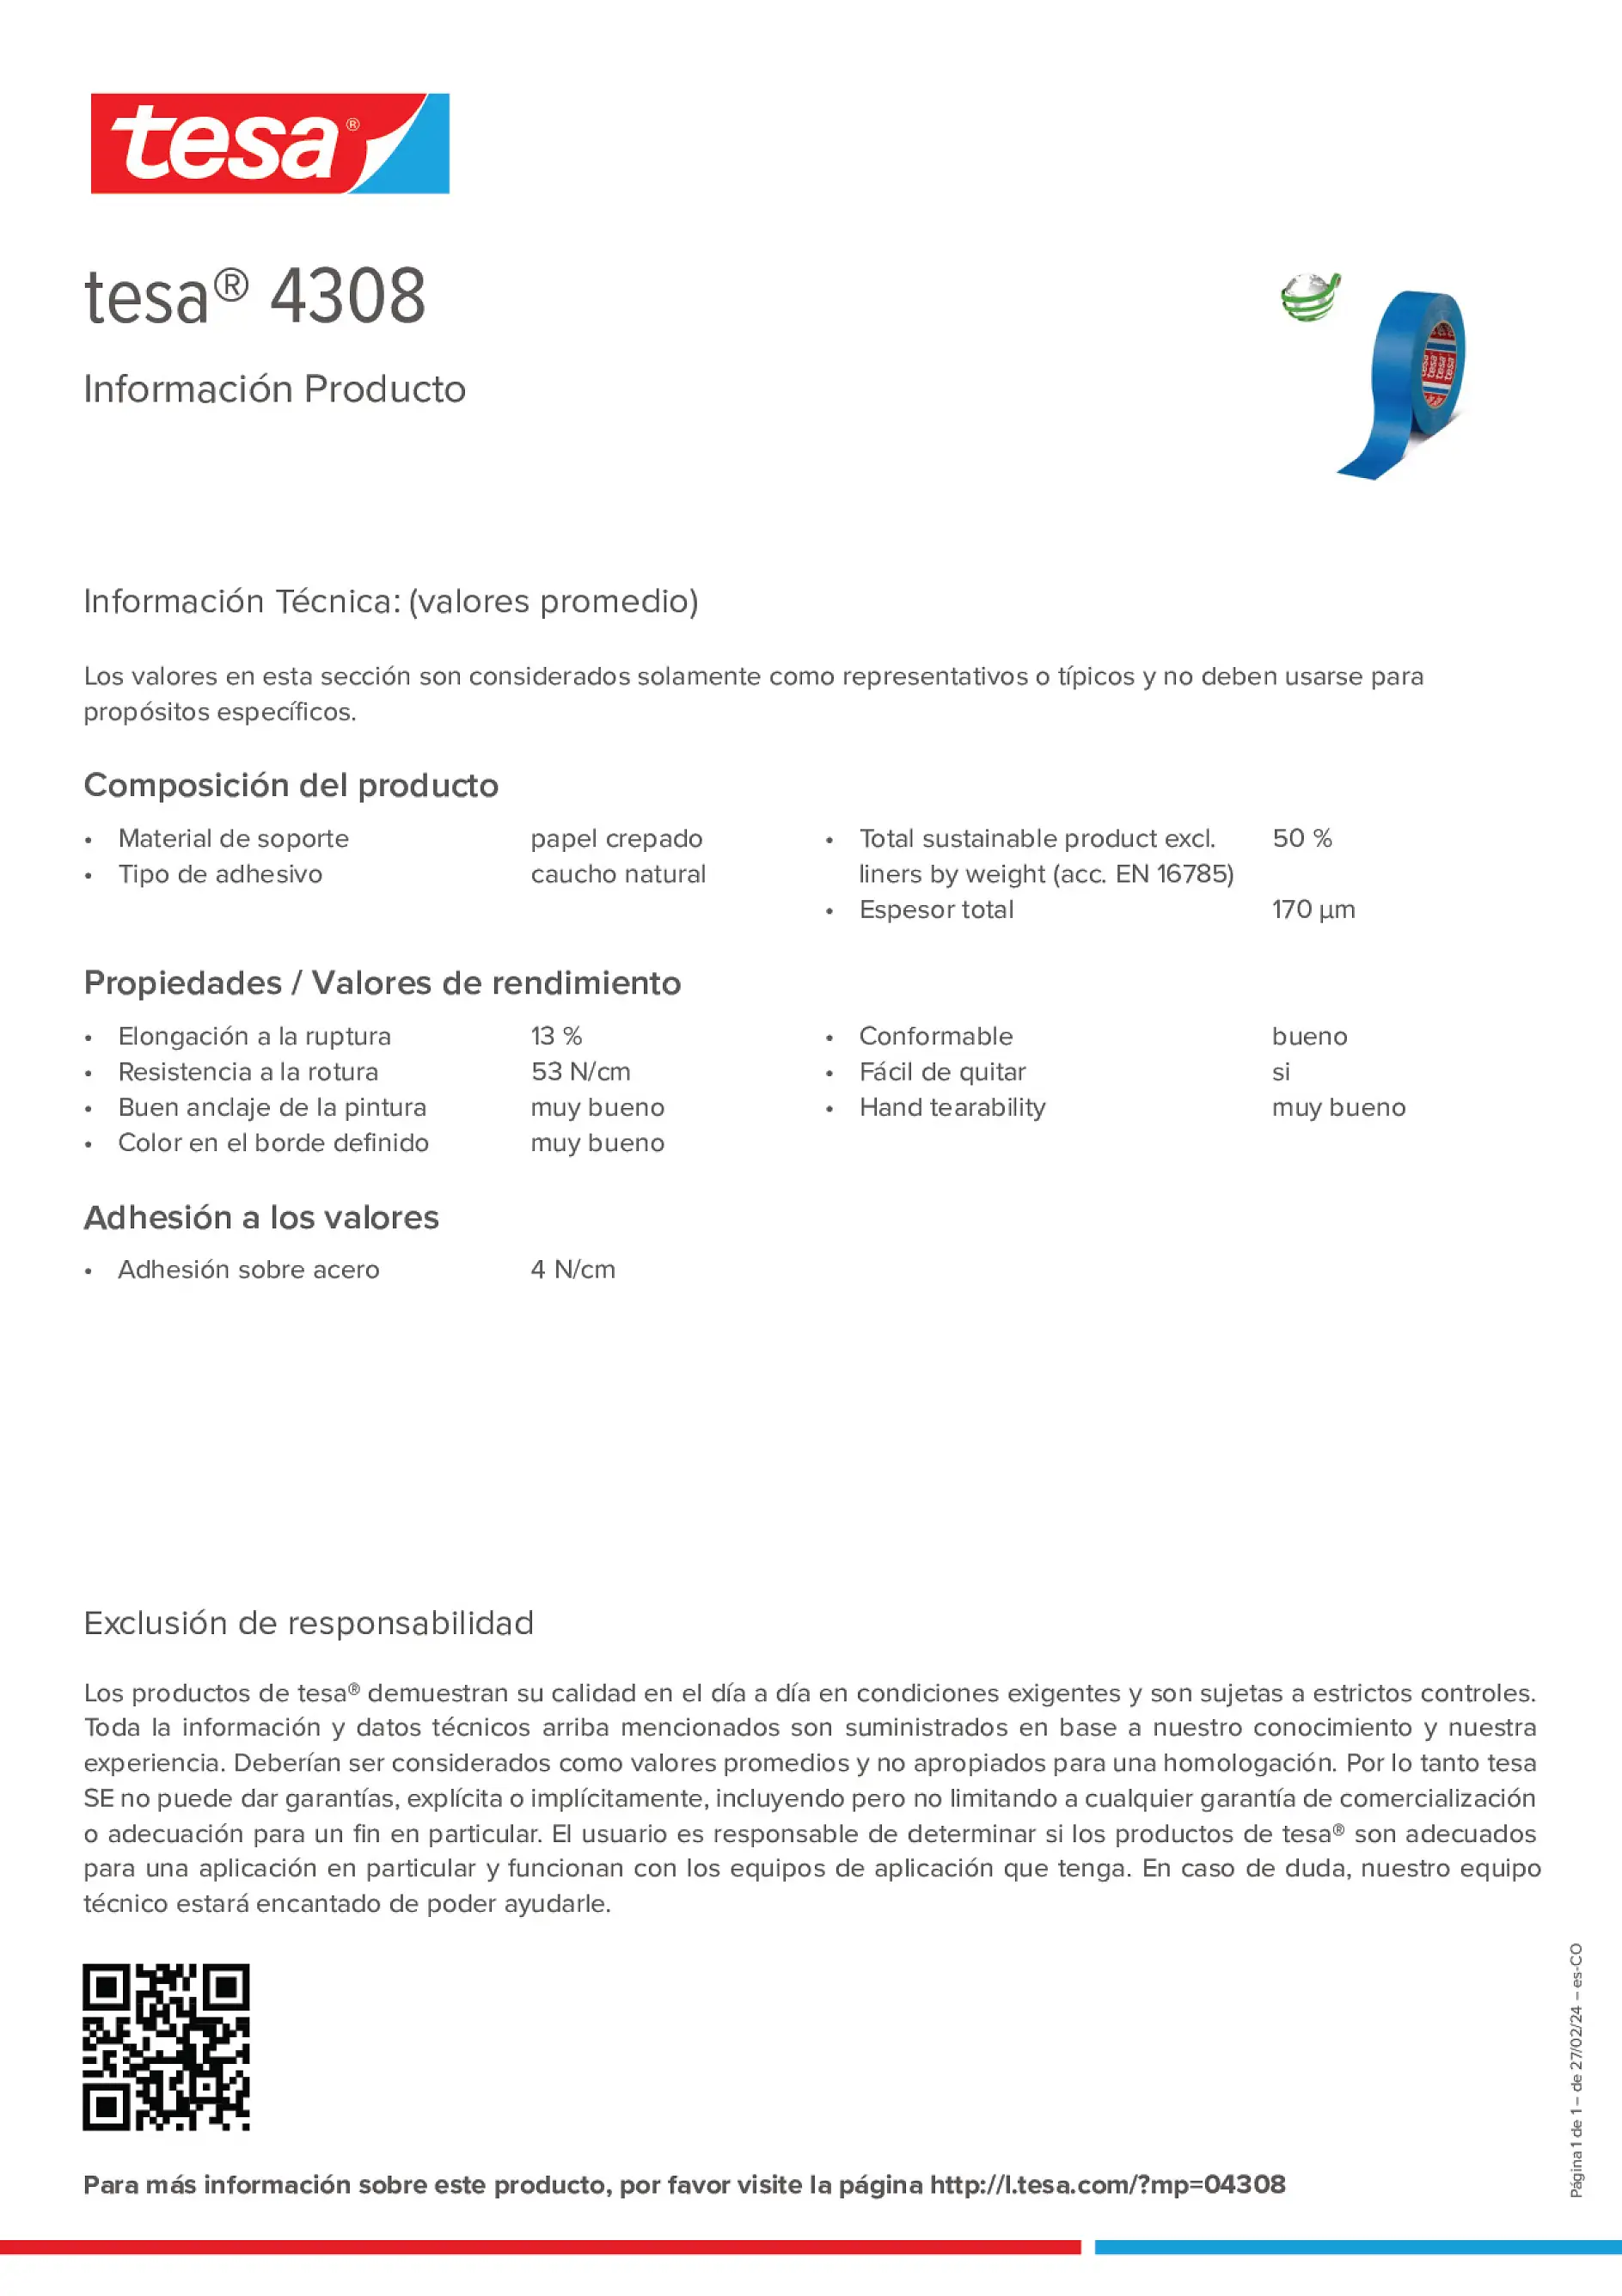 Product information_tesa® 04308_es-CO